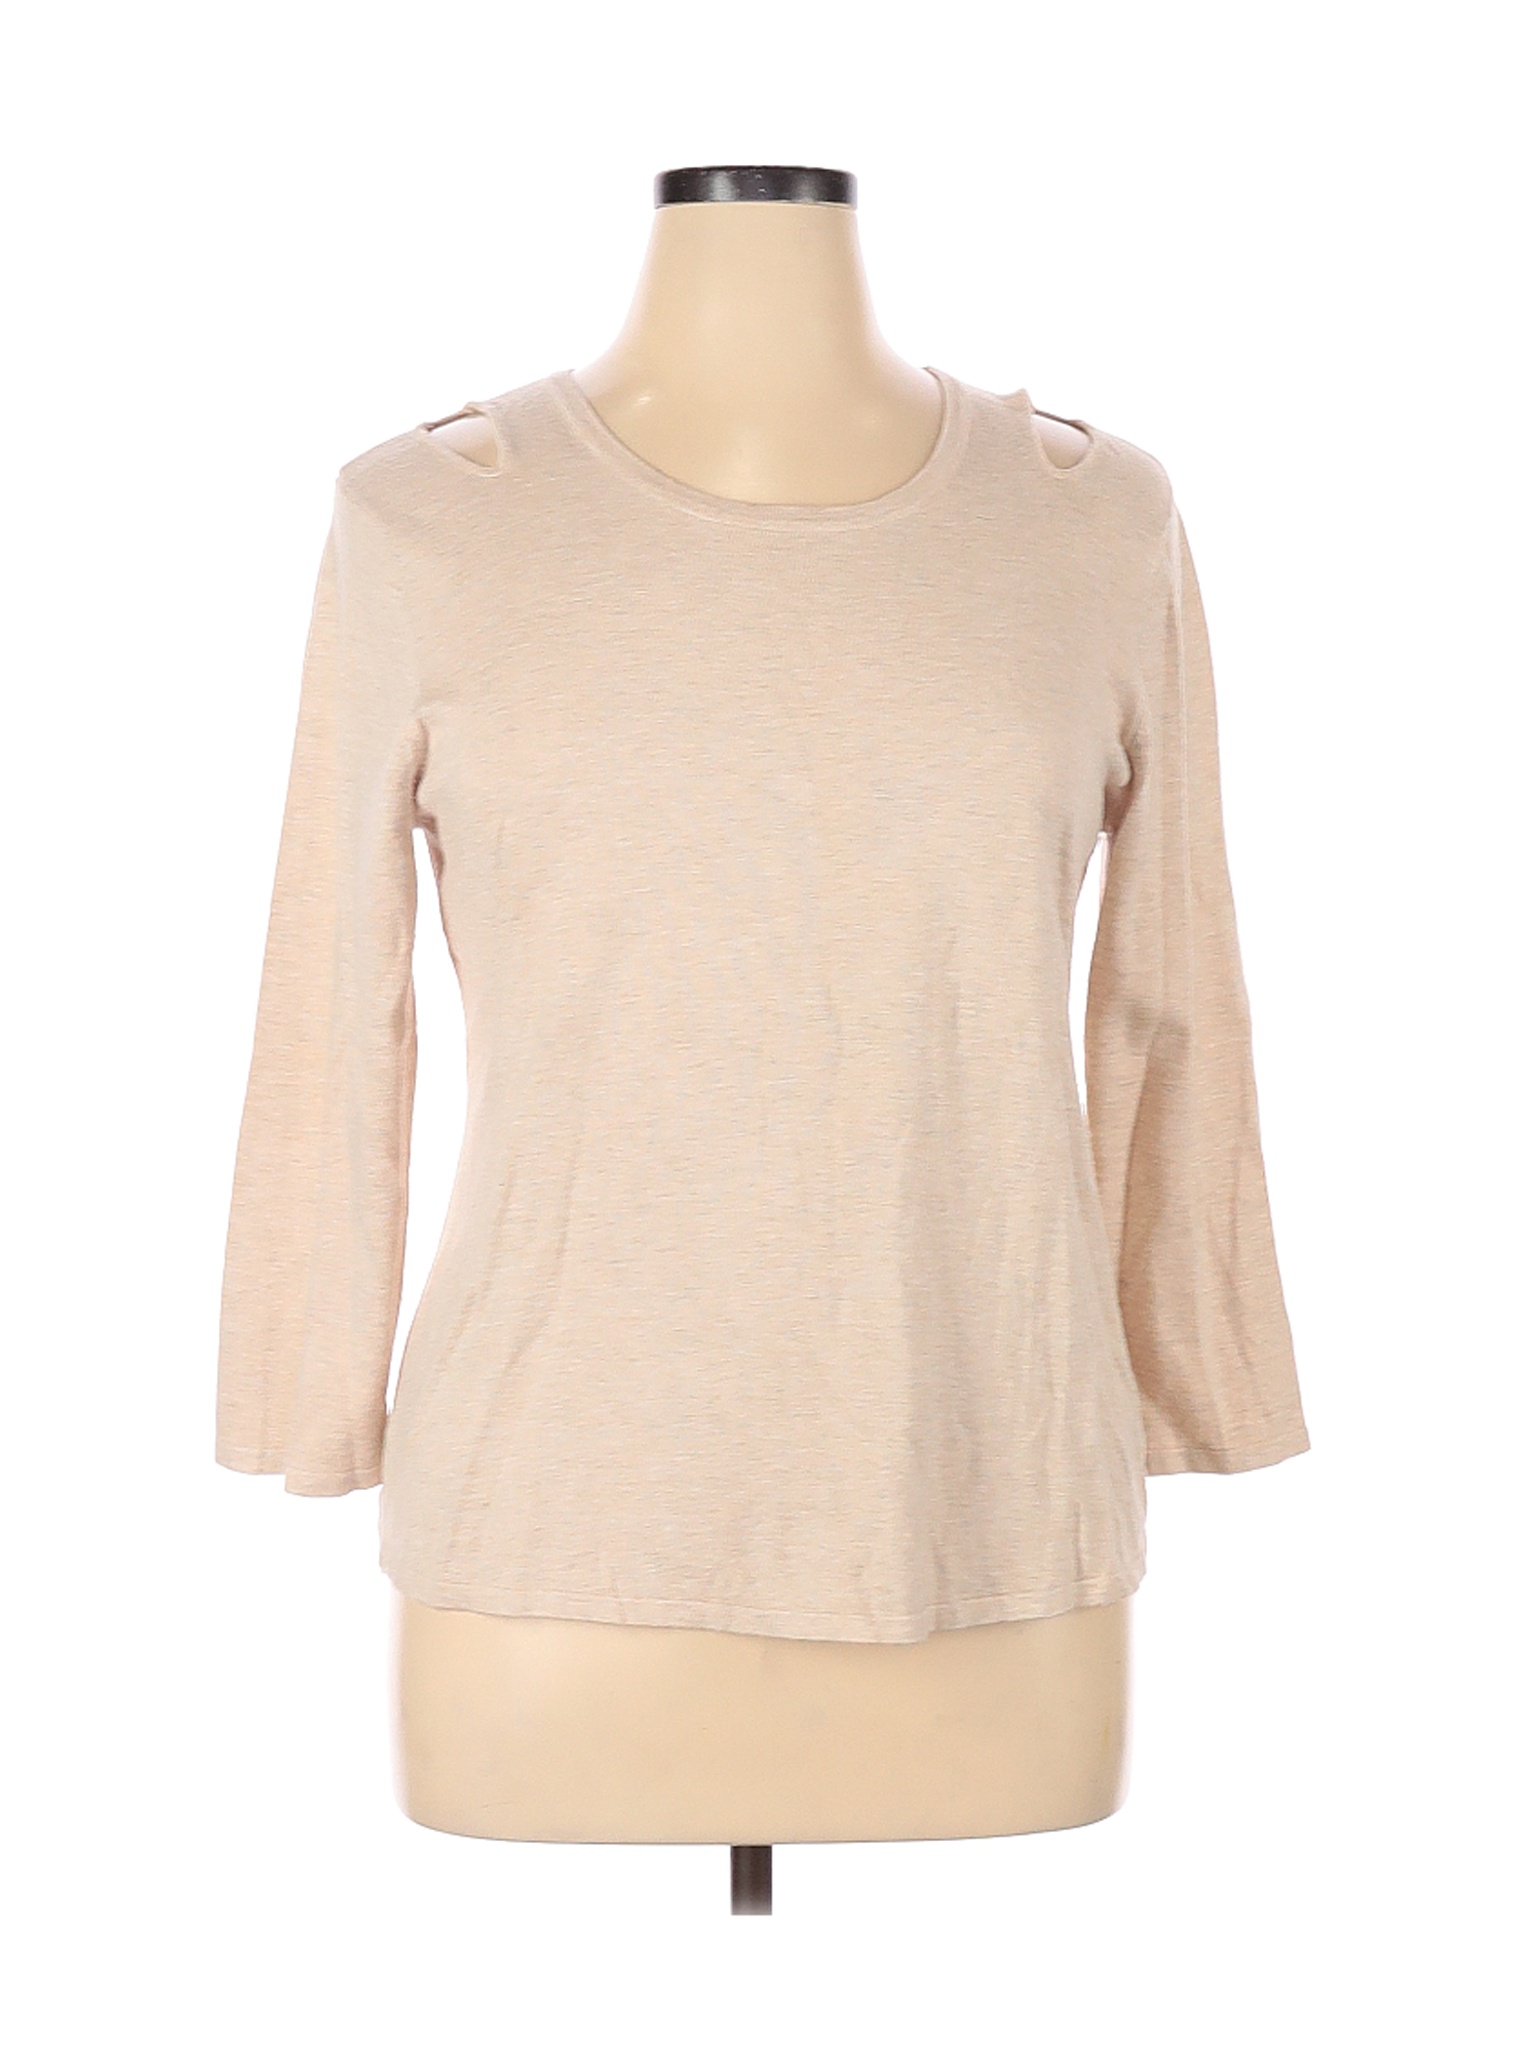 Chelsea & Theodore Women Brown Pullover Sweater XL | eBay